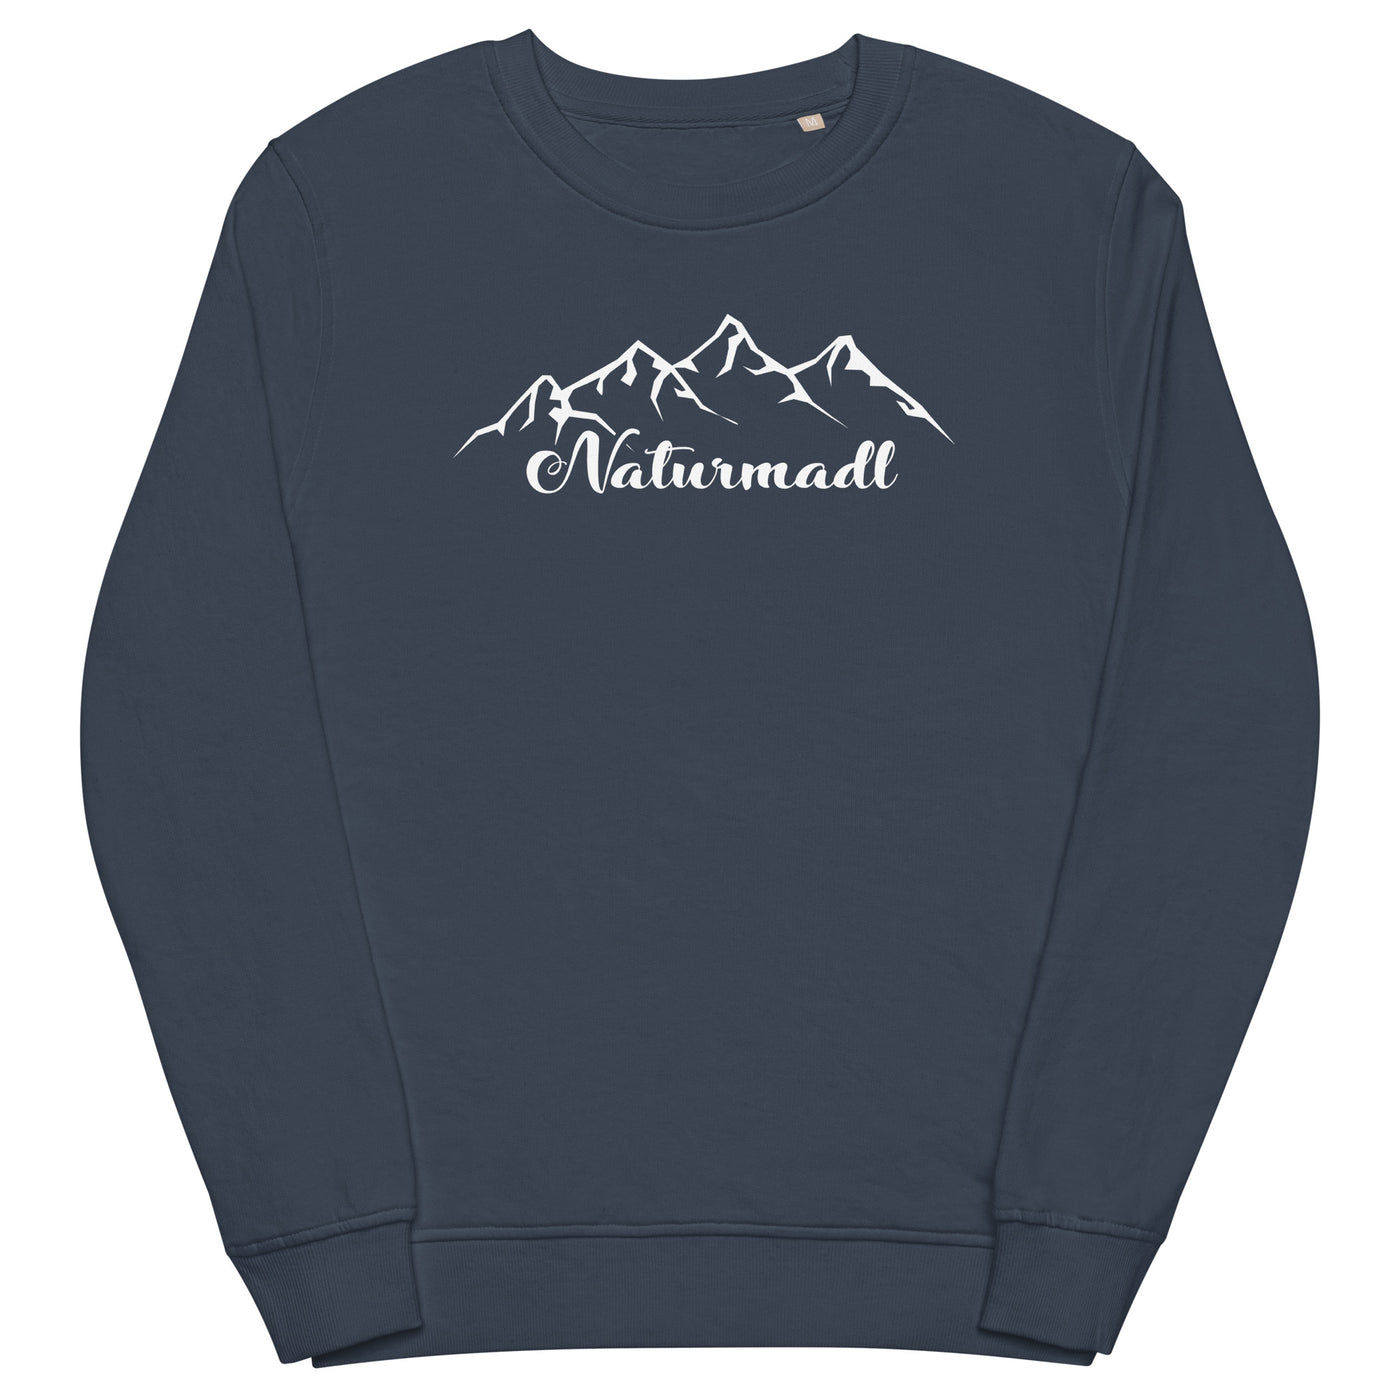 Naturmadl - Unisex Premium Organic Sweatshirt berge xxx yyy zzz French Navy